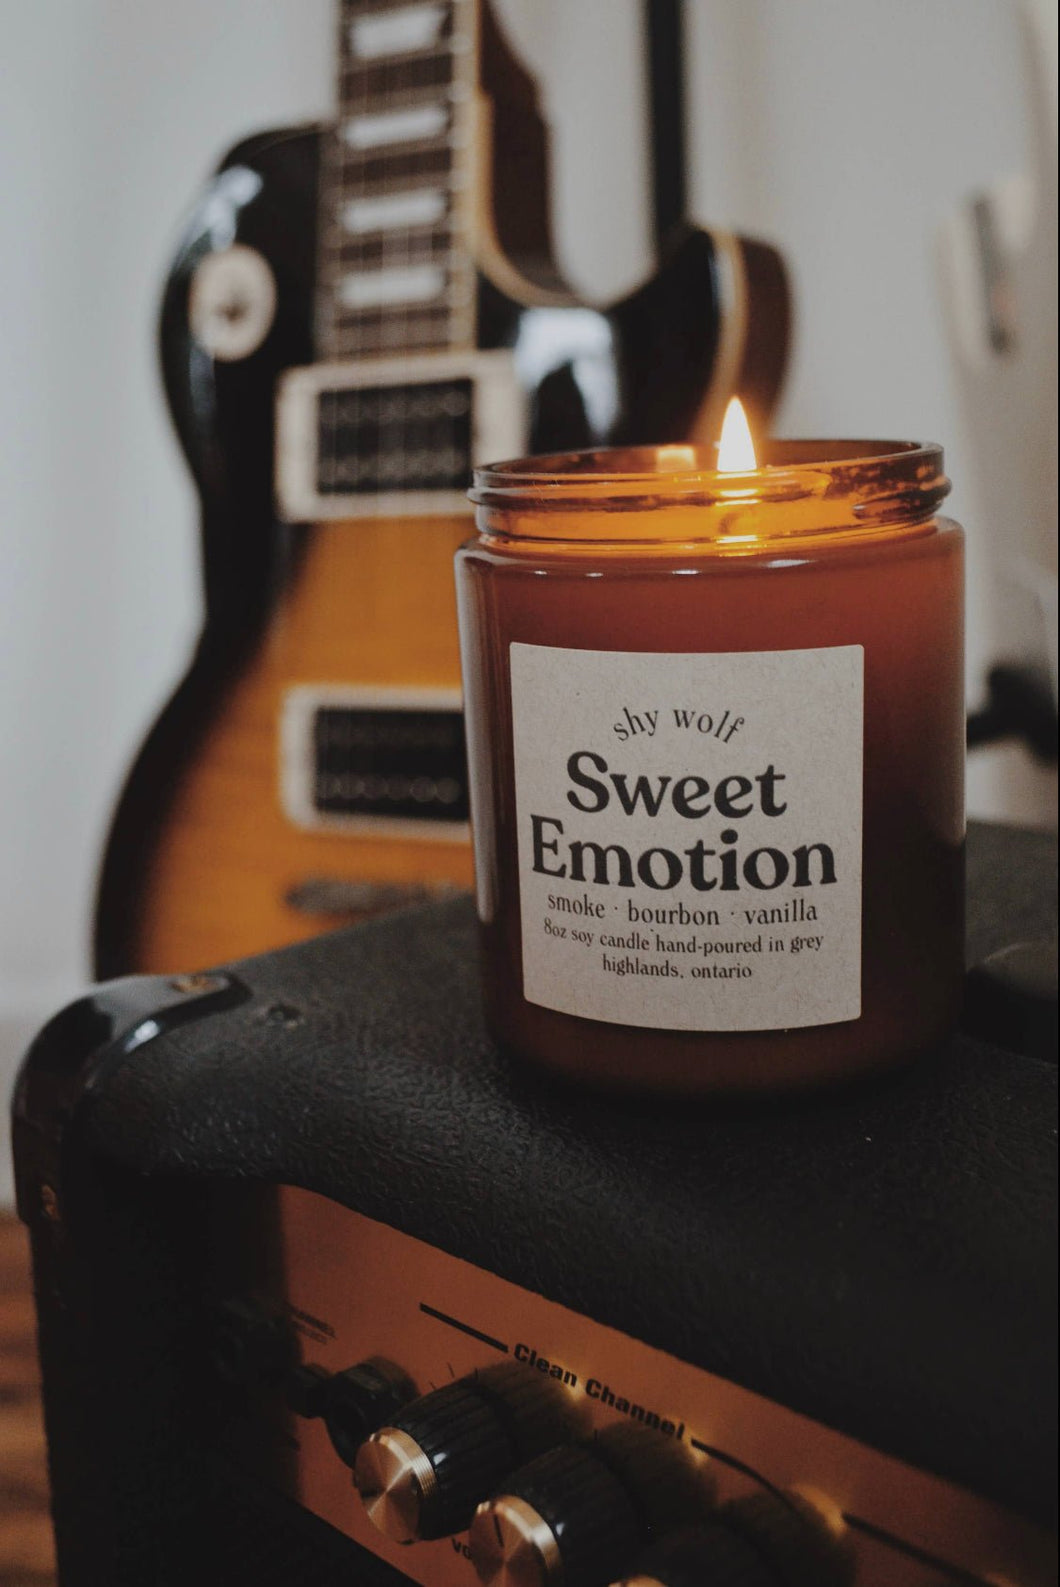 Sweet Emotion Candle - Vanilla, Bourbon, Smoke - Rock N Roll - Good Judy (.com)